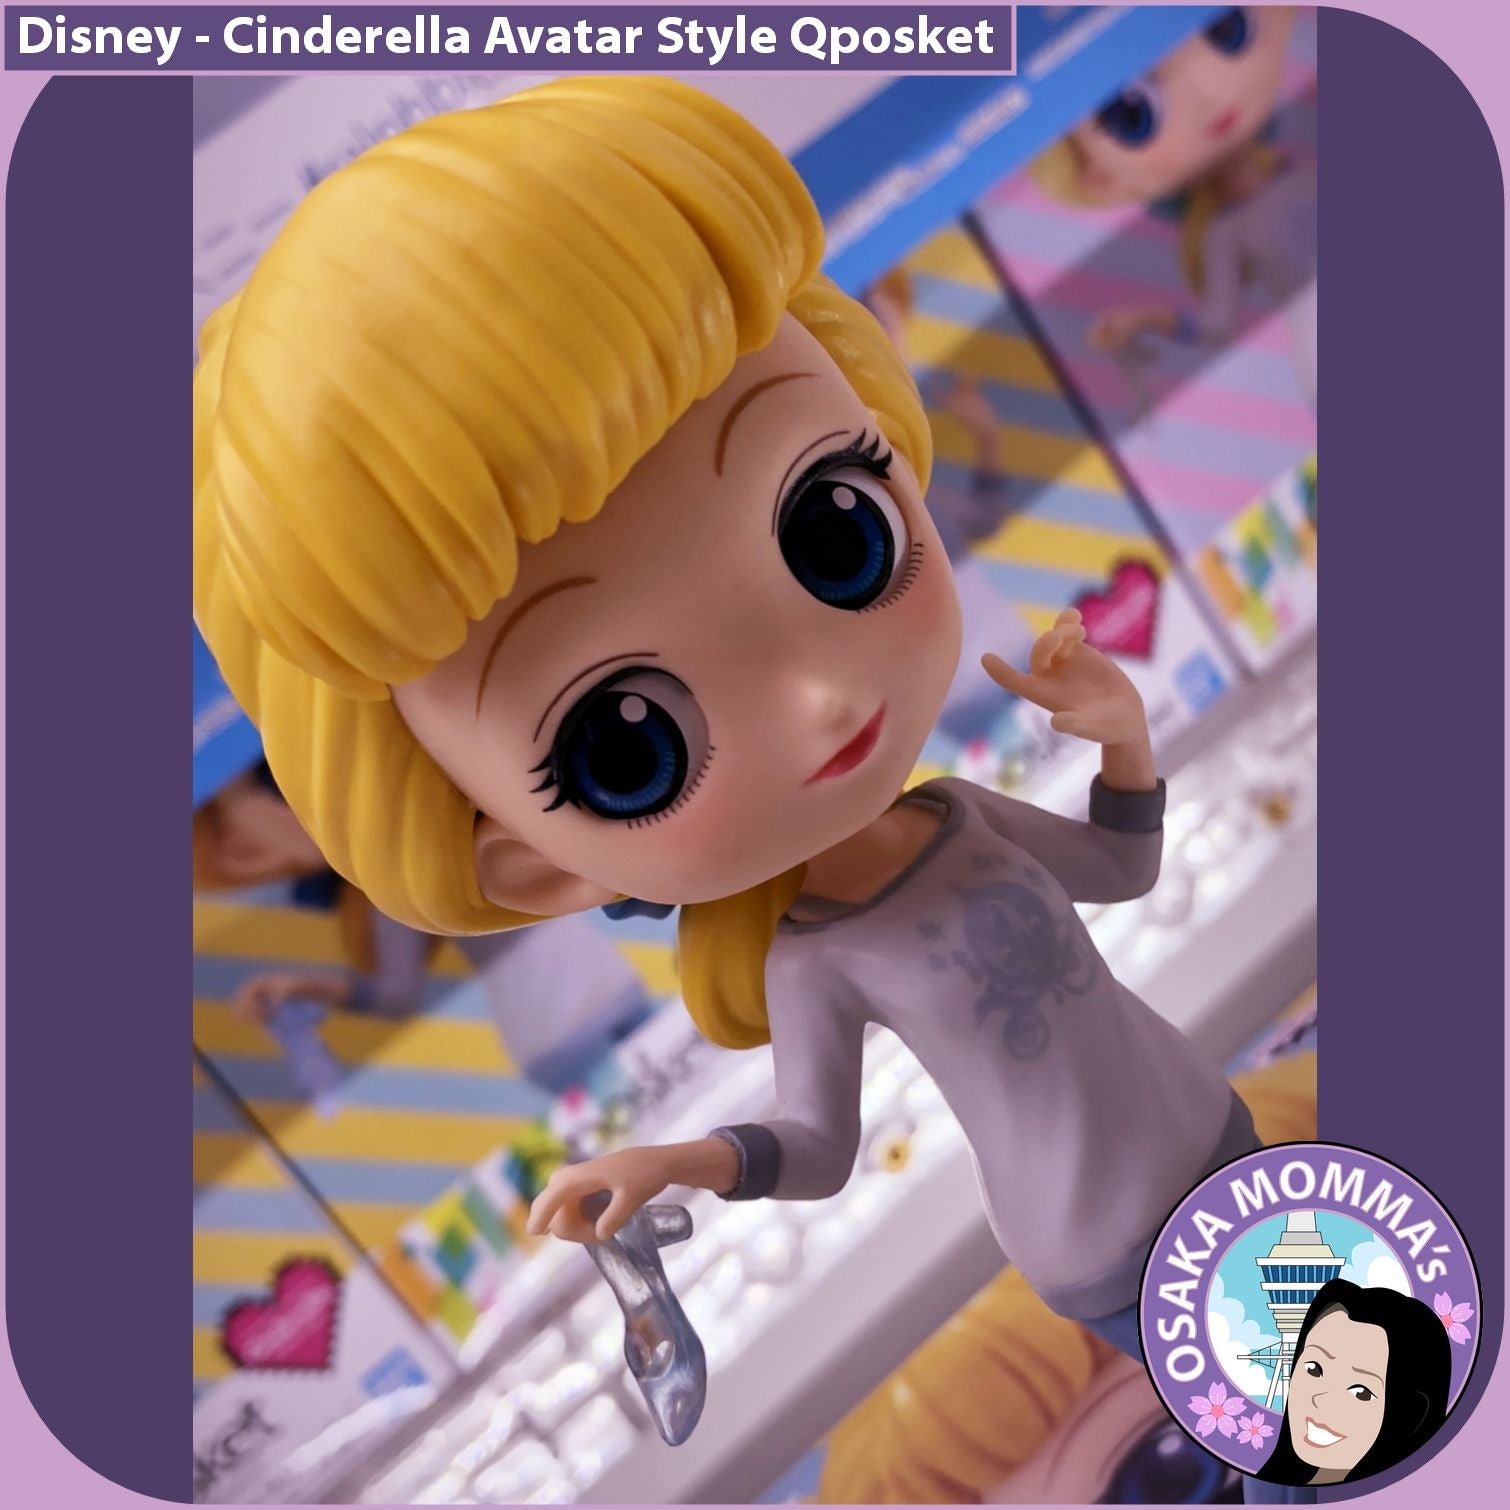 Cinderella Avatar Style Qposket Figure